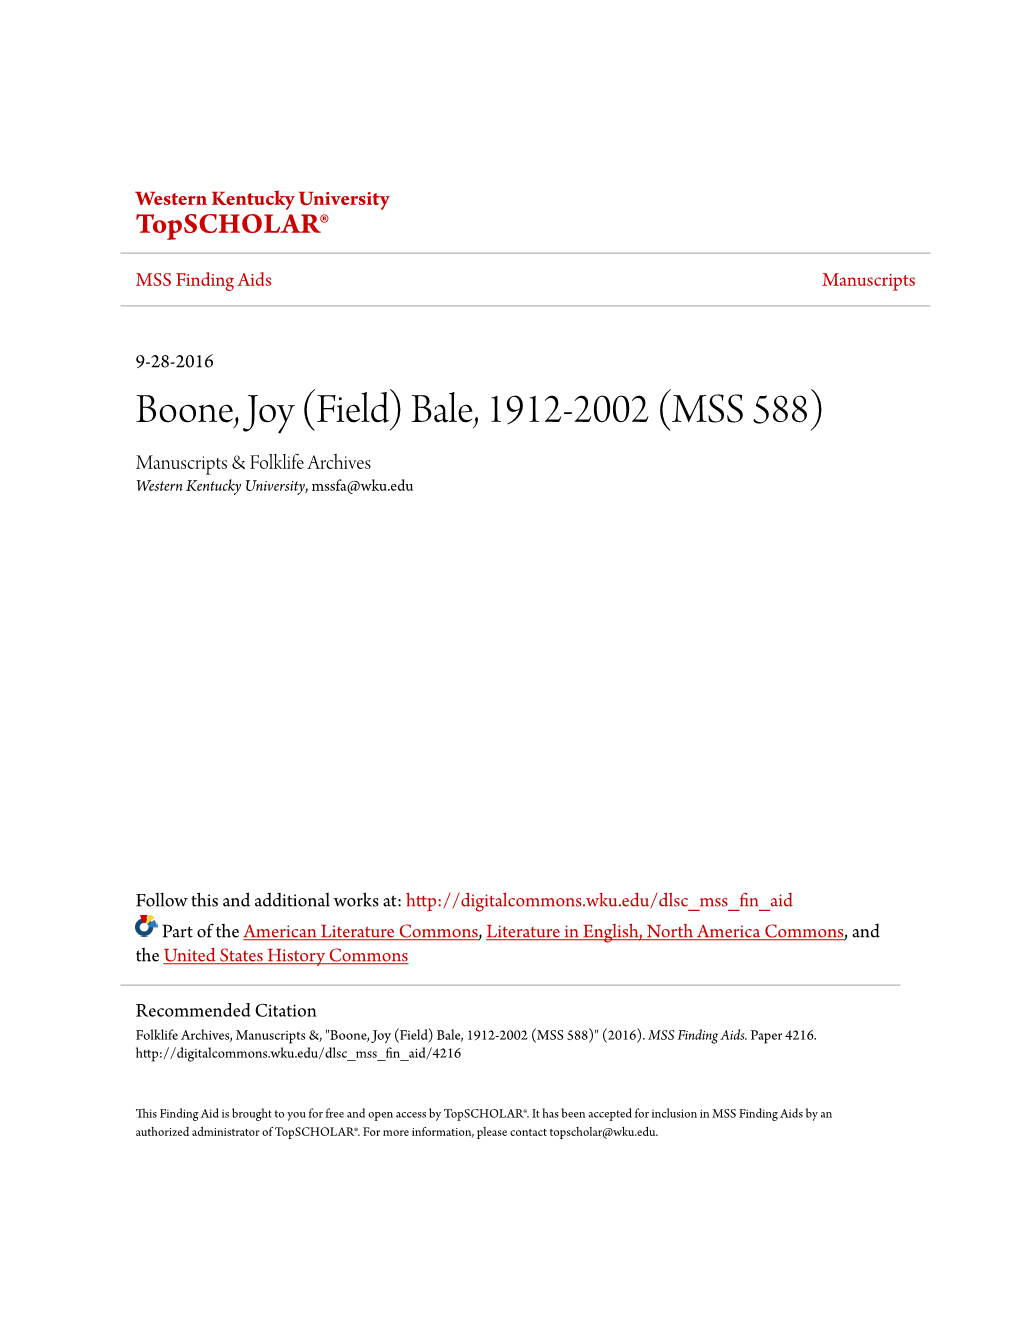 Boone, Joy (Field) Bale, 1912-2002 (MSS 588) Manuscripts & Folklife Archives Western Kentucky University, Mssfa@Wku.Edu